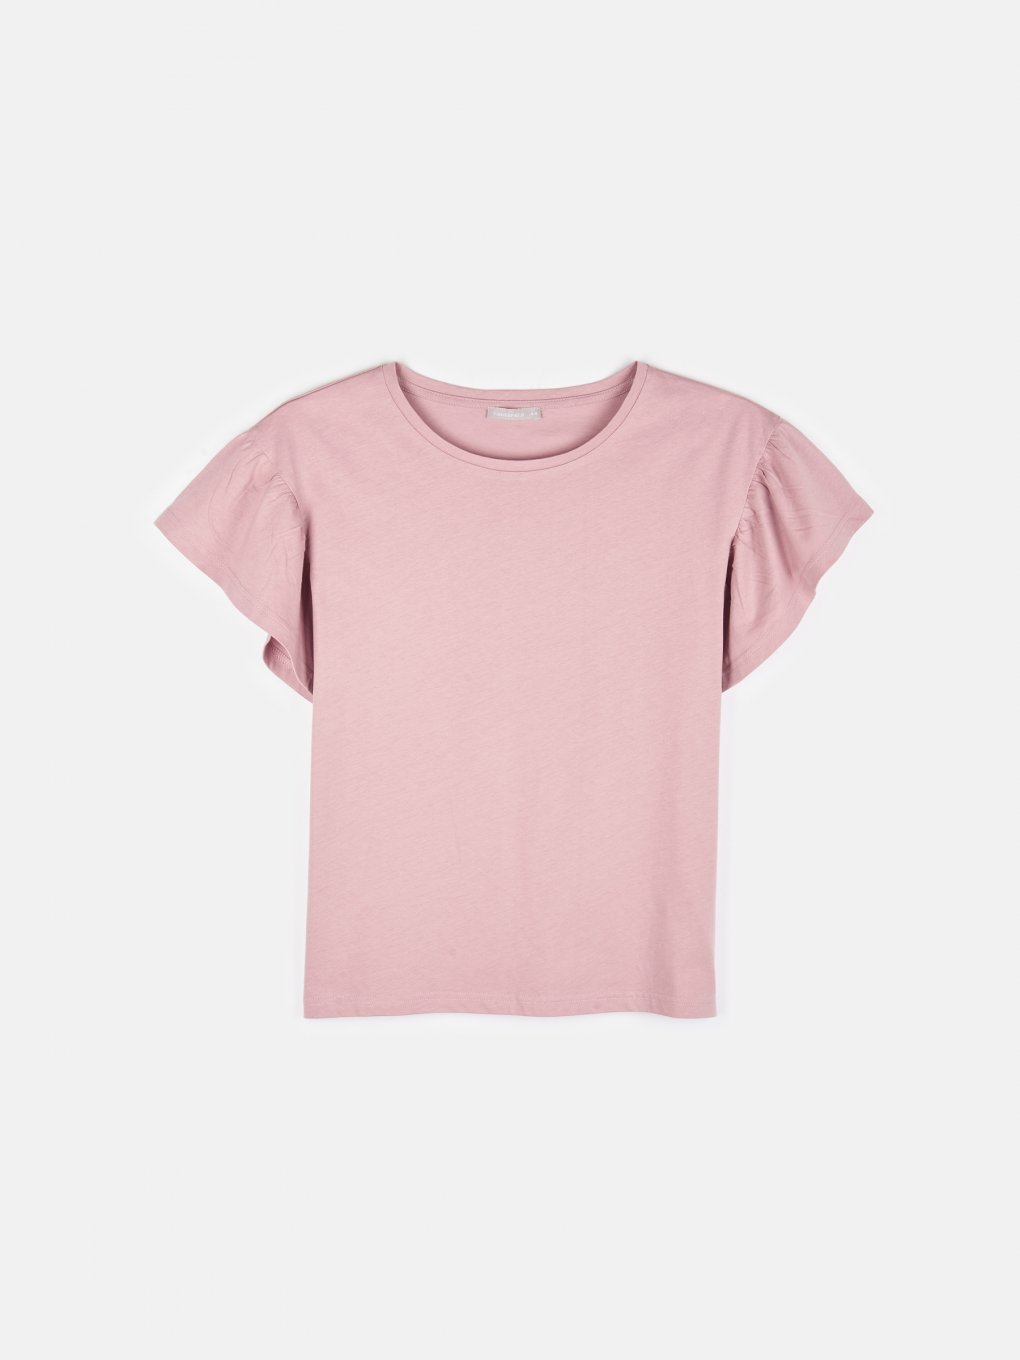 Jednobarevné dámské tričko s volánem plus size